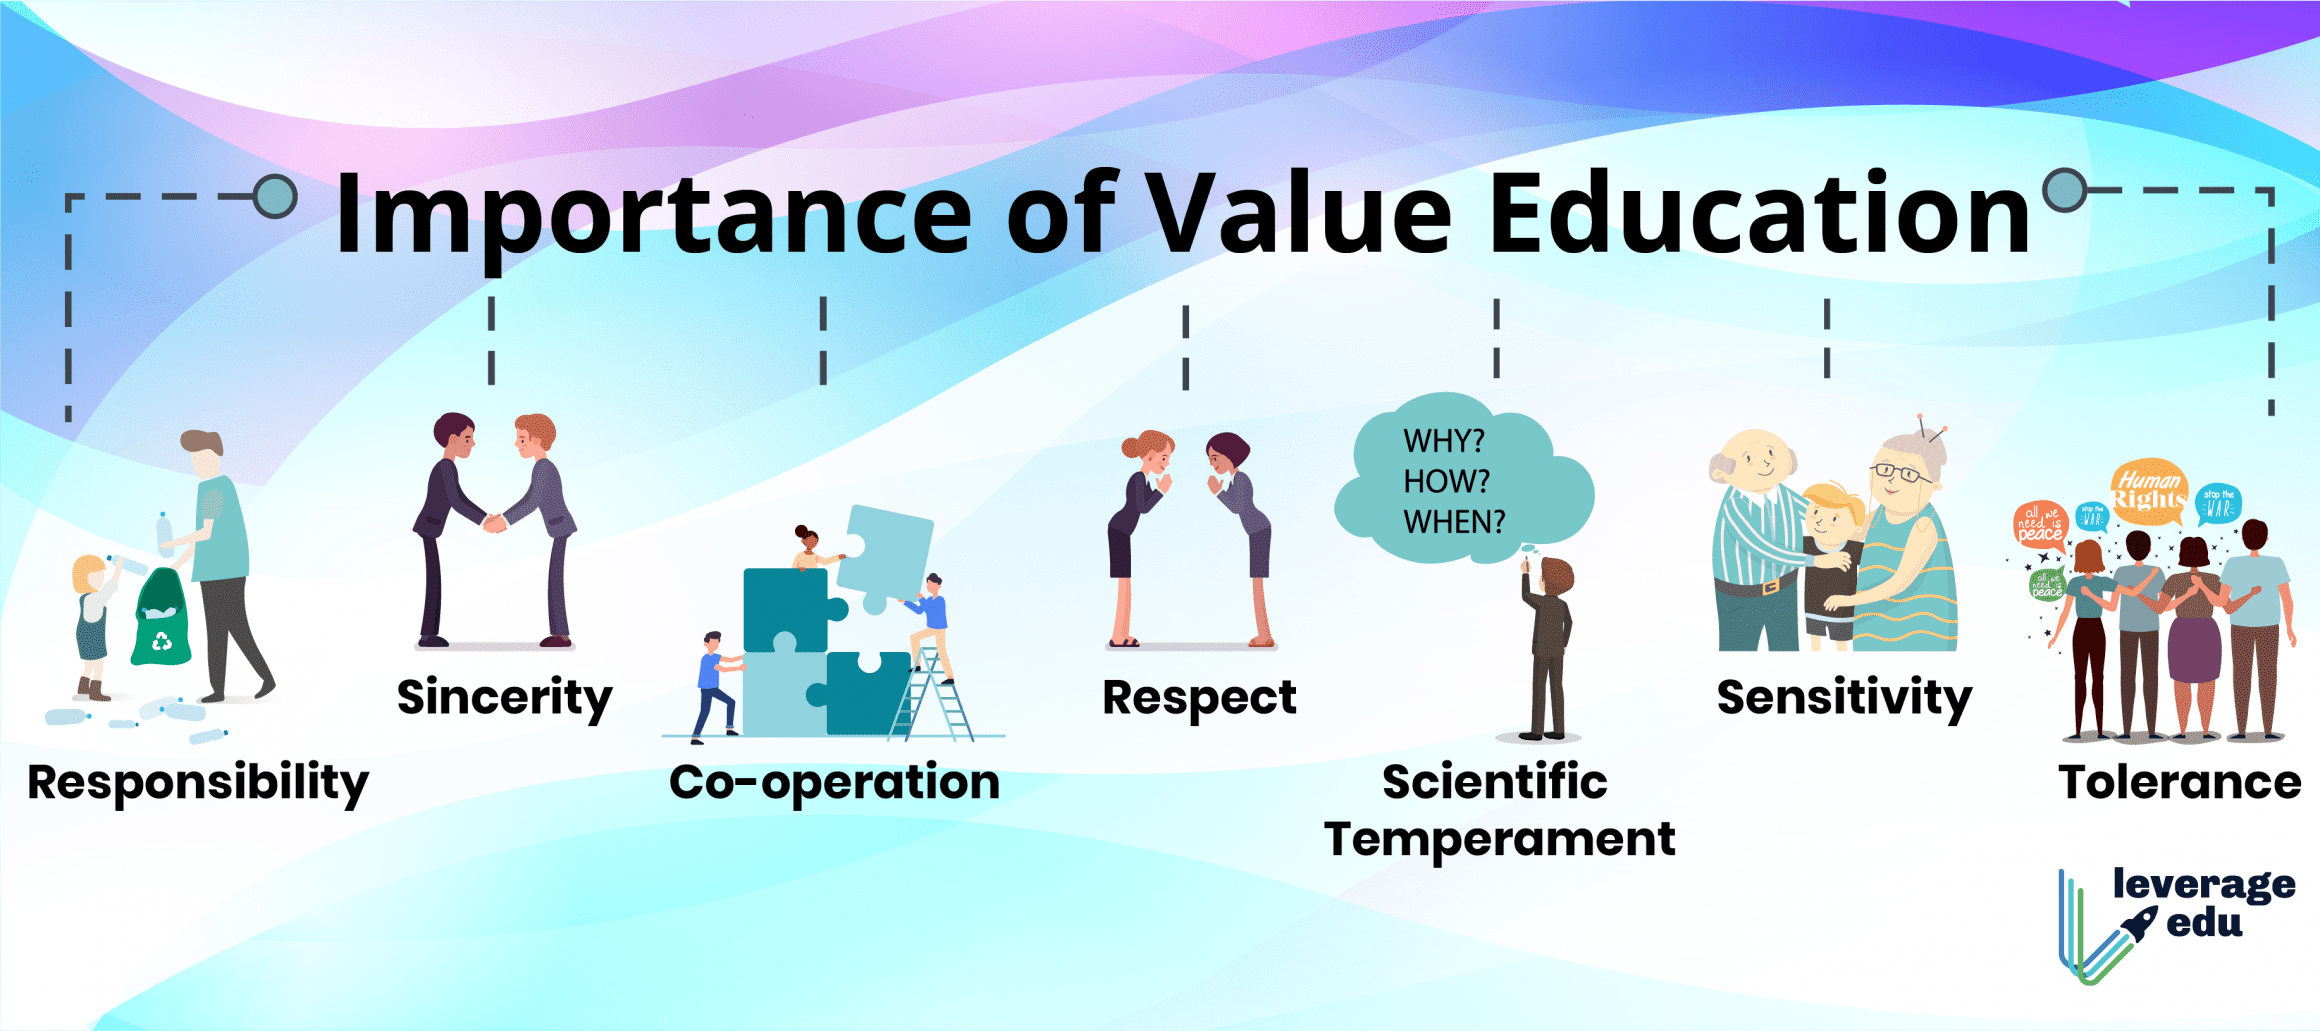 value education and life skills essay